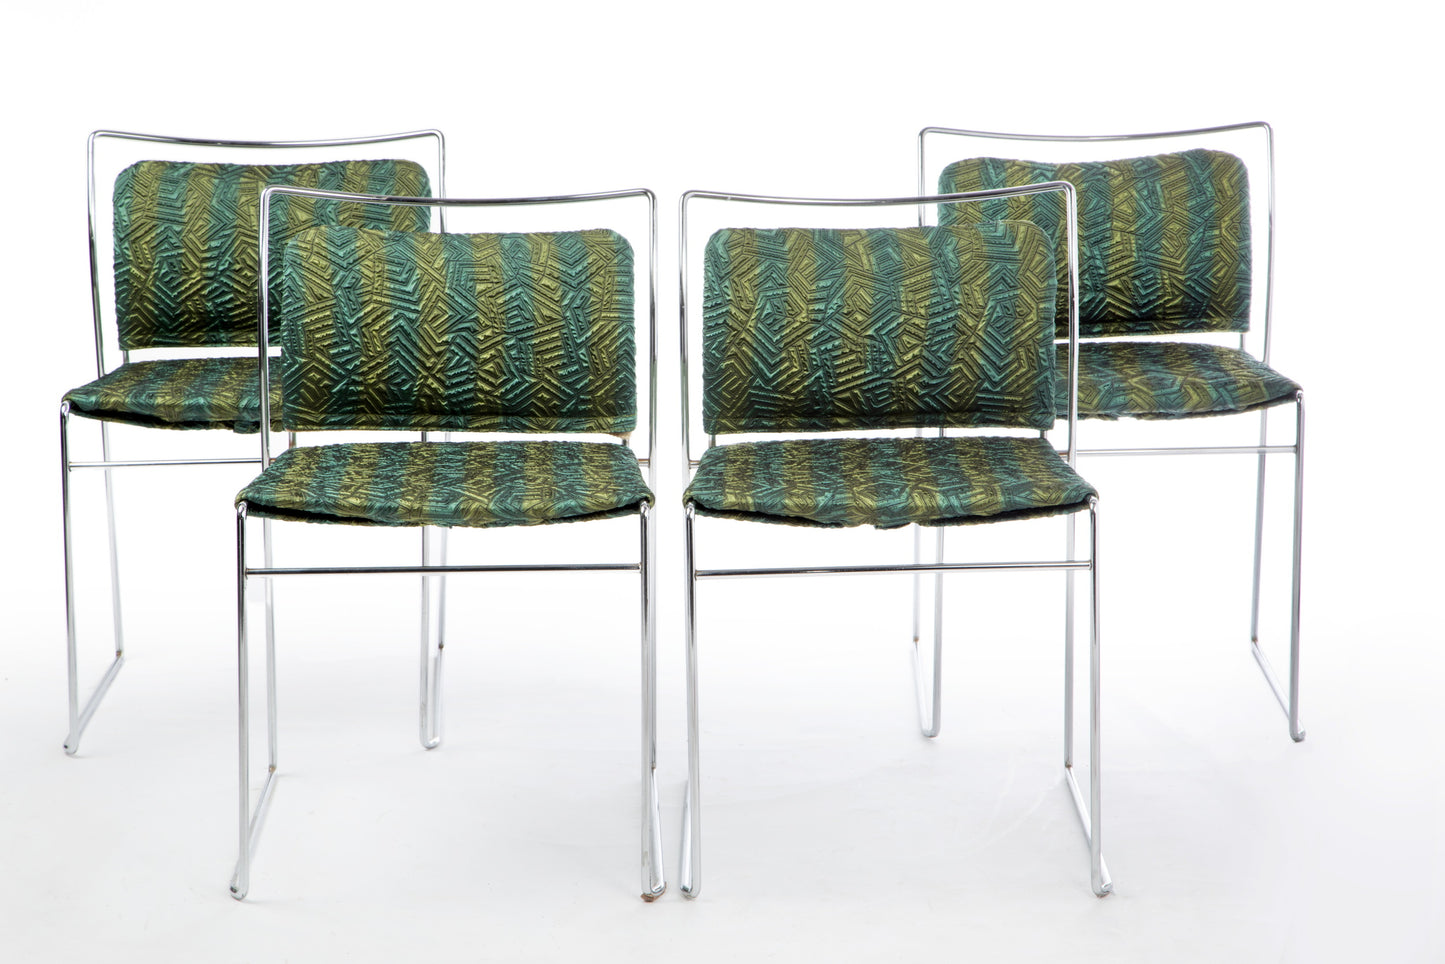 Four "Tulu" chairs Kazuhide Takahama for Simon Gavina 1960s-70s